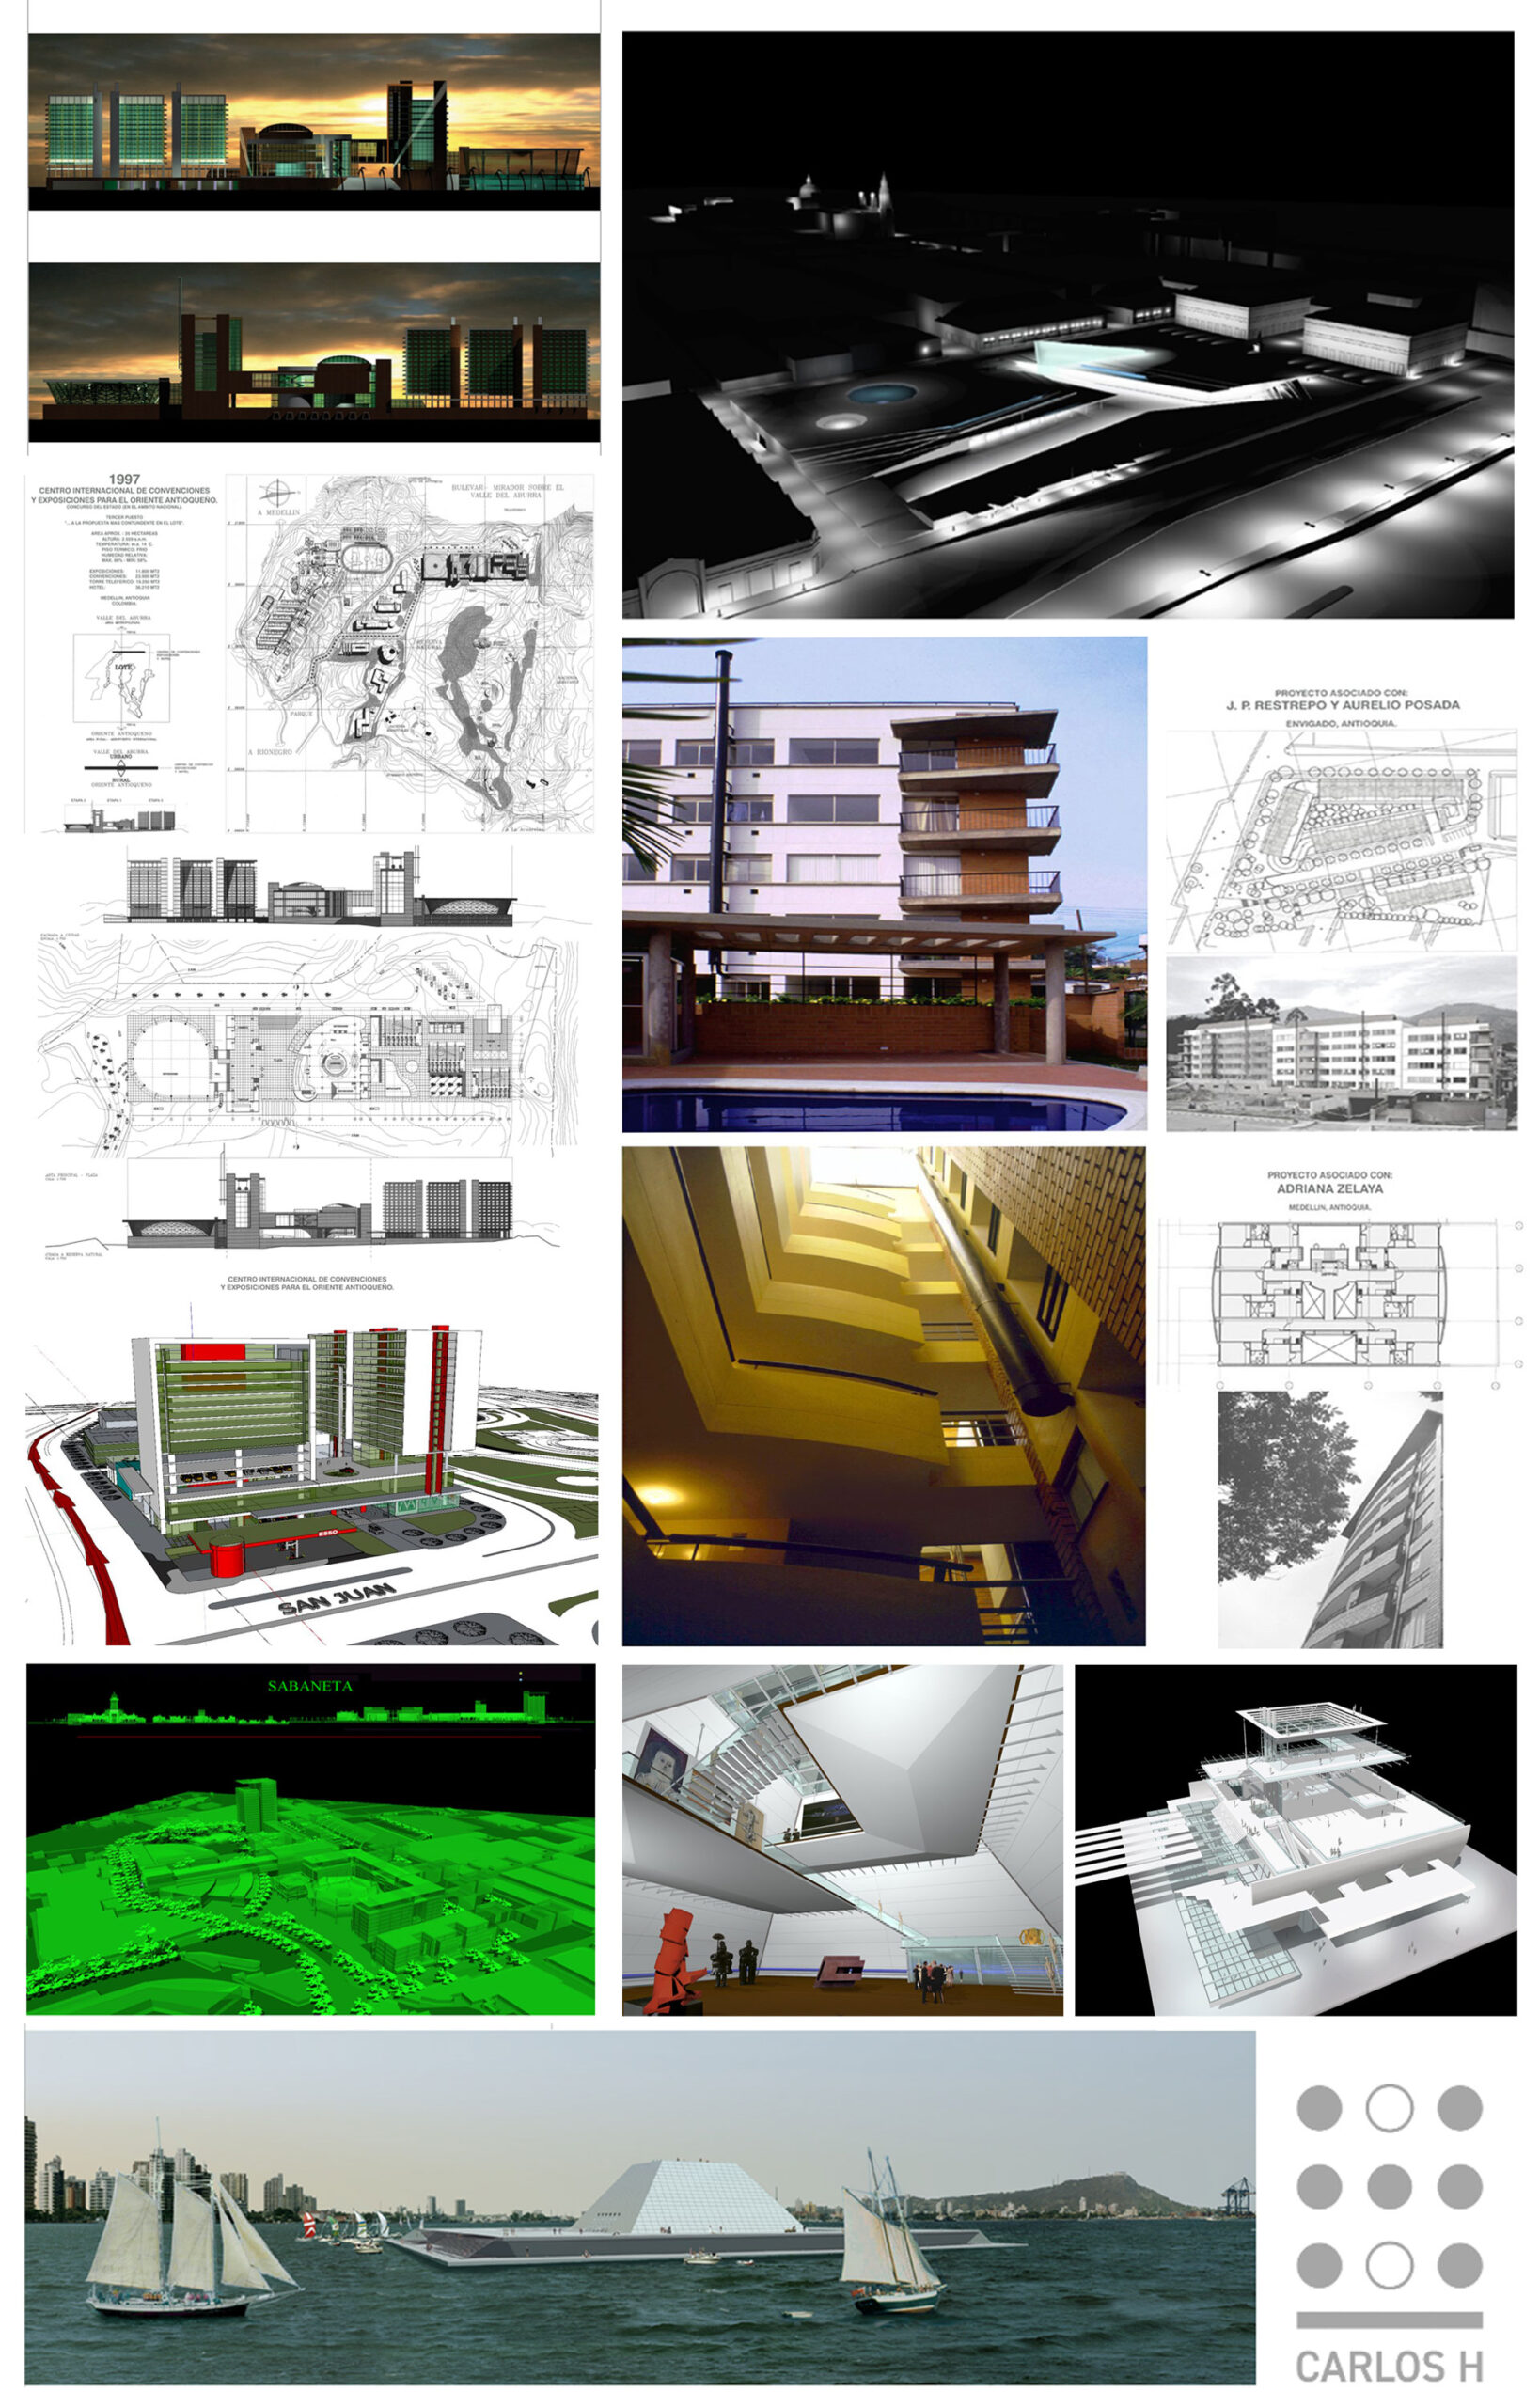 Imágenes representativas e ilustrativas sobre la Arquitectura Gran Formato.